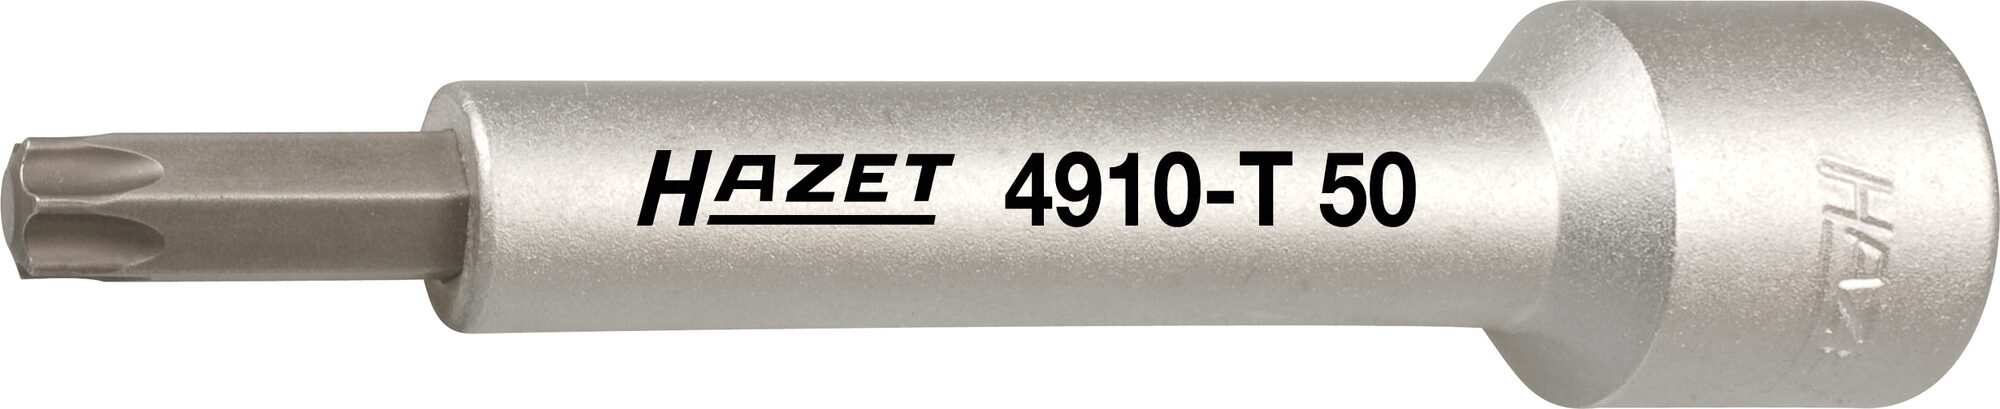 HAZET Gegenhalter für Kolbenstange 4910-T50 · Vierkant hohl 12,5 mm (1/2 Zoll) · Innen TORX® Profil · T50